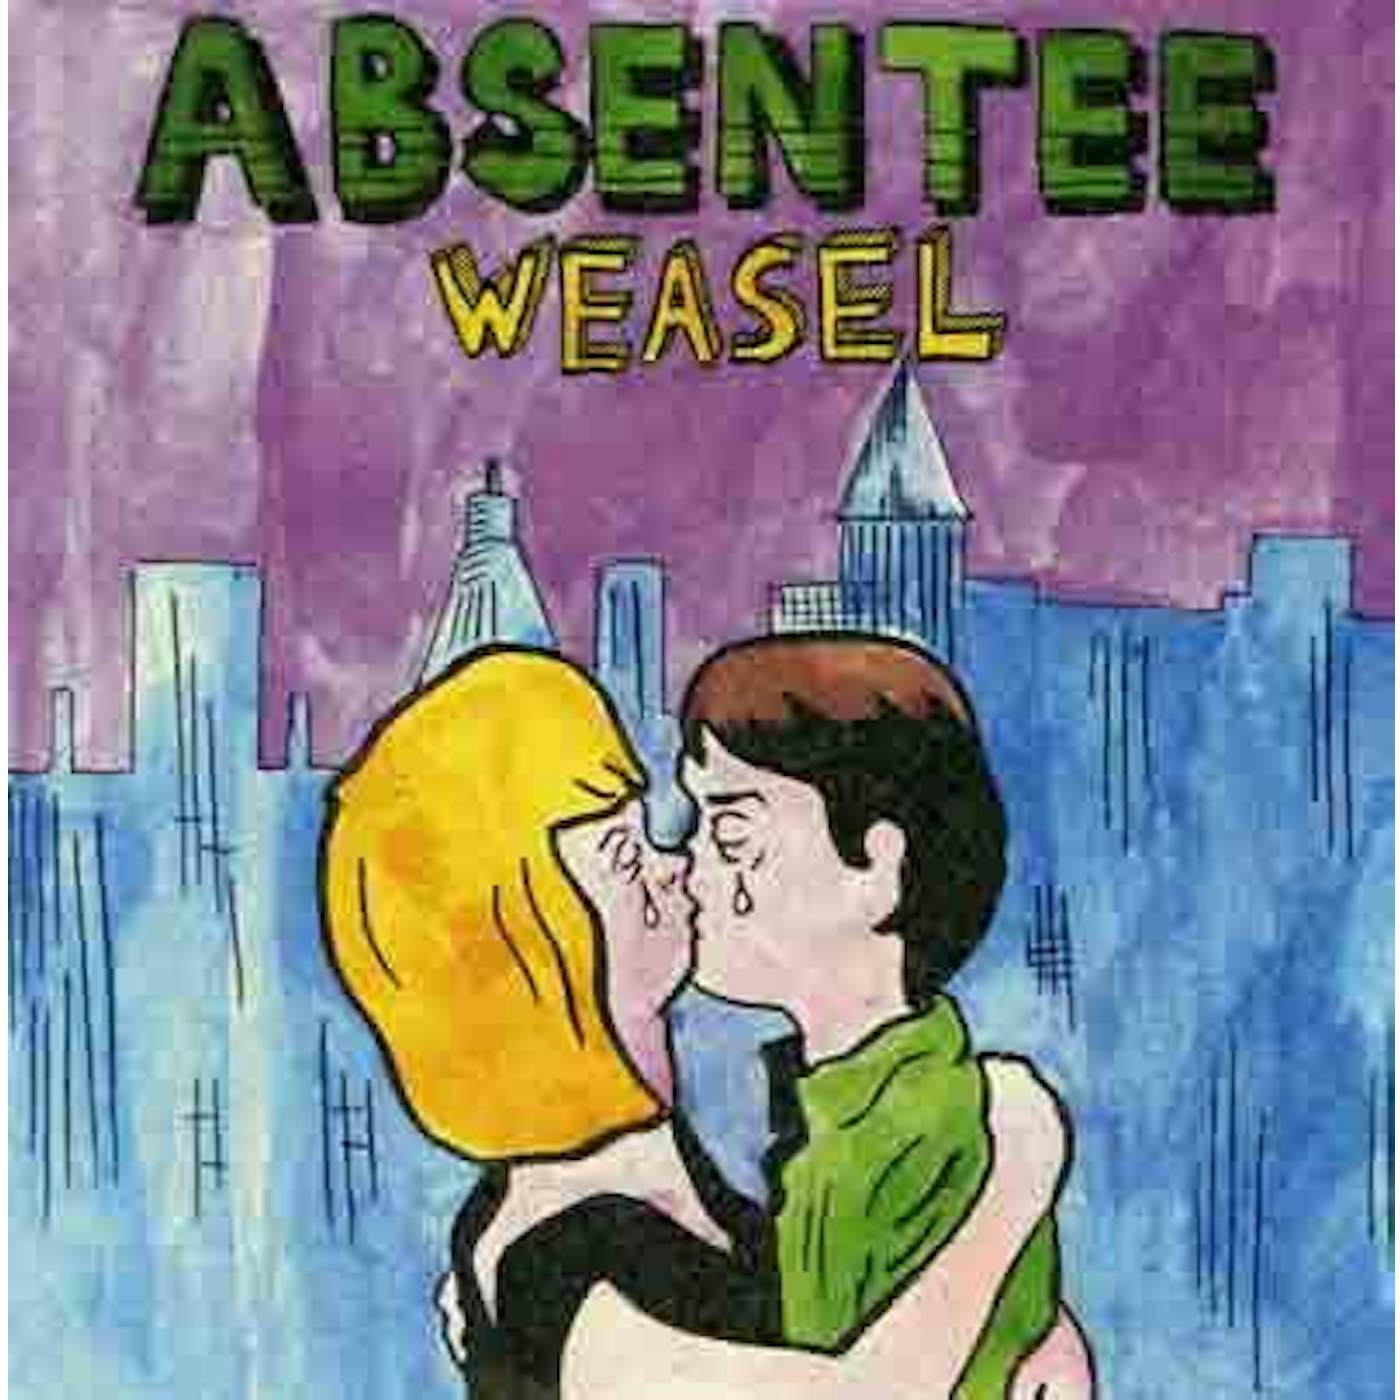 Absentee Weasel Vinyl Record